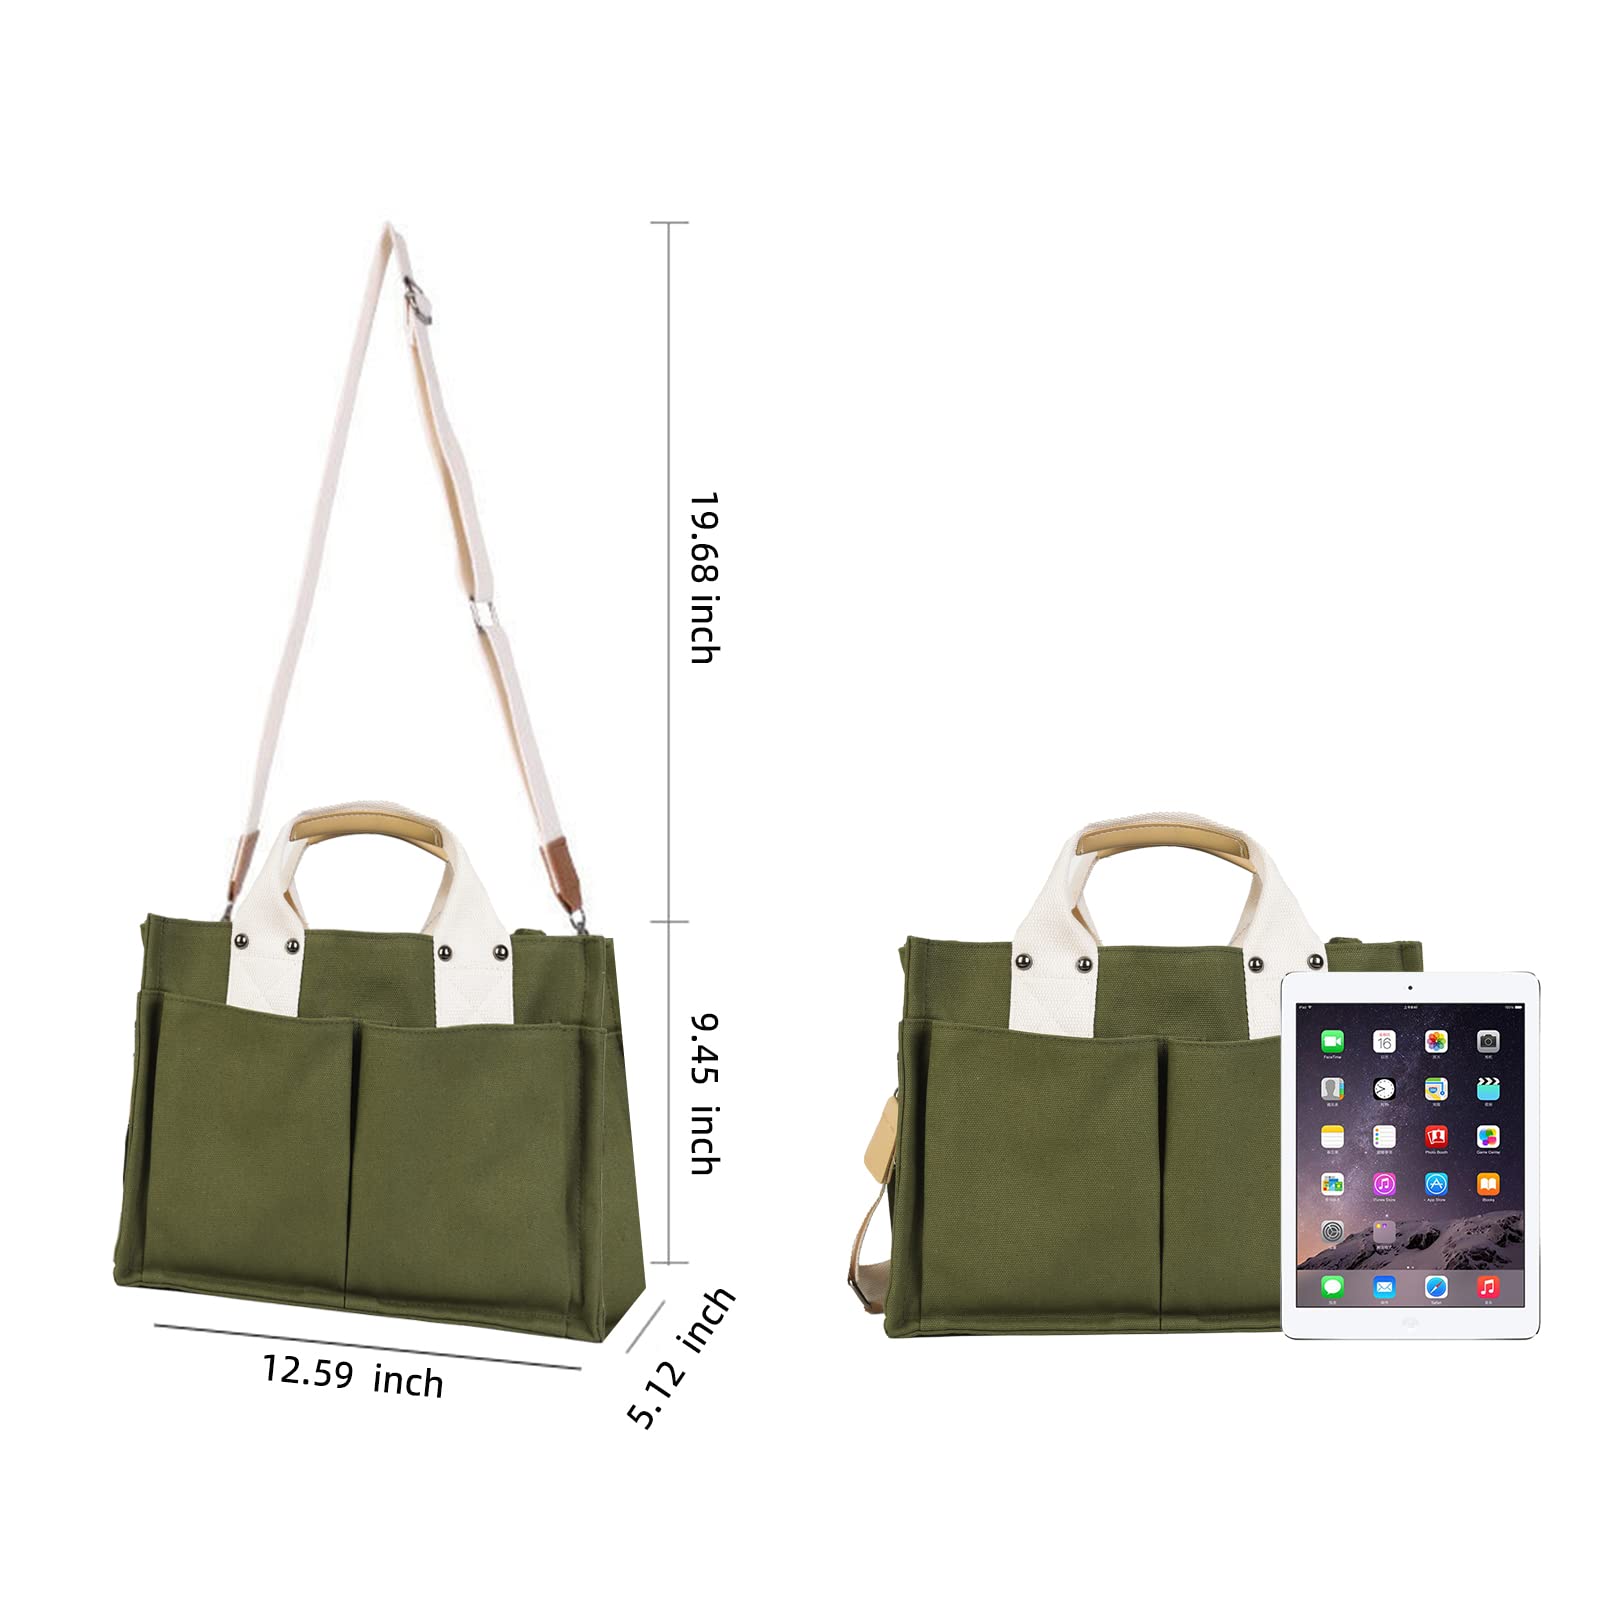 Valleycomfy Women's Hobo Handbags Casual Shoulder Hobo Bags Stylish Crossbody Bag Messenger Bag with Multiple Pockets